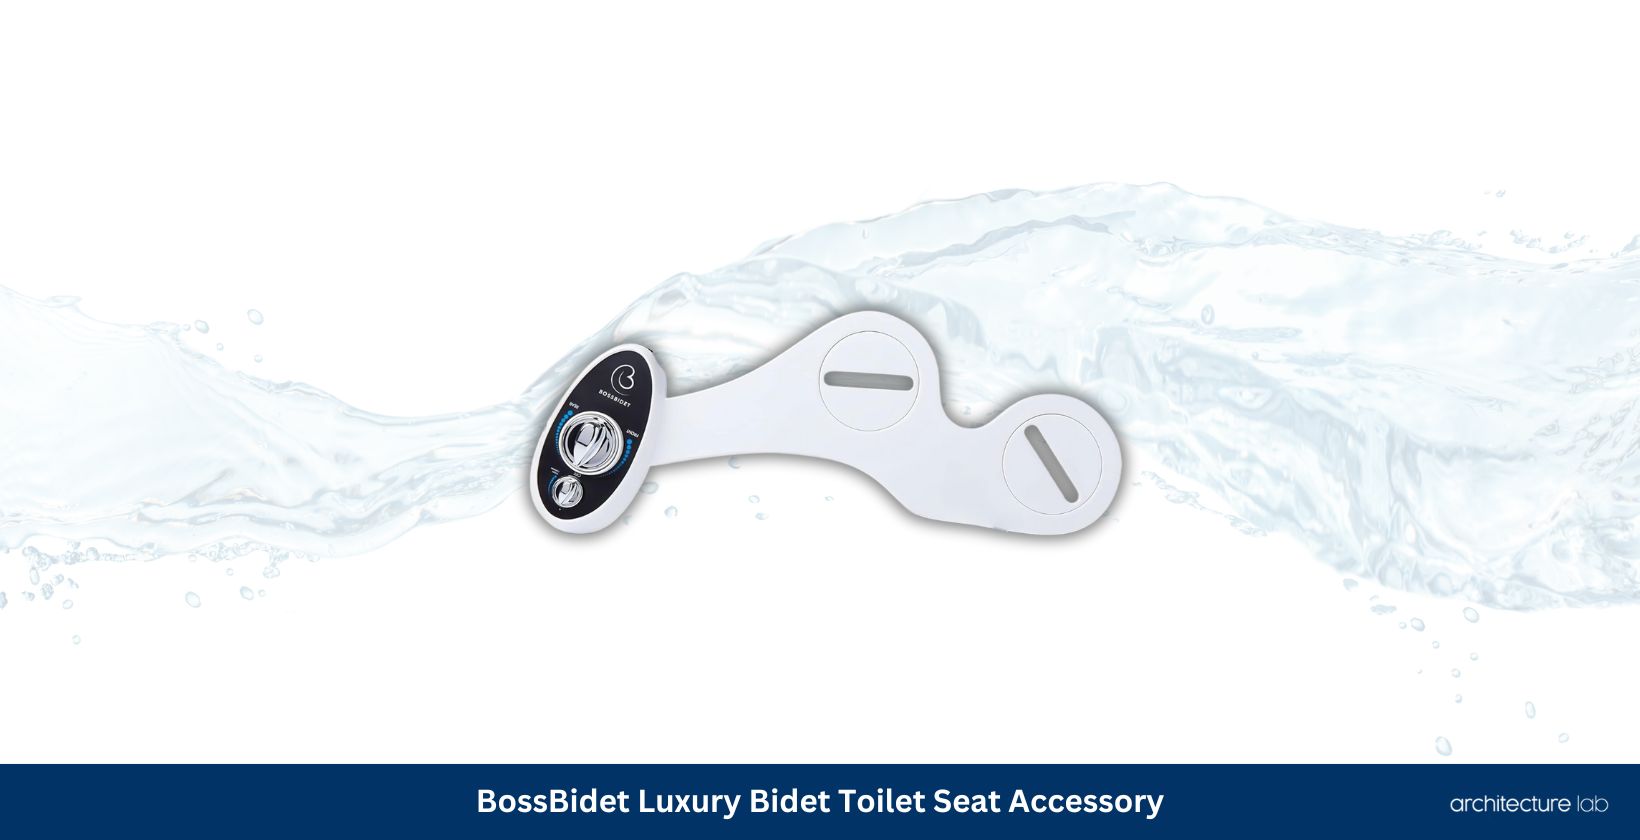 Bossbidet luxury bidet toilet seat accessory